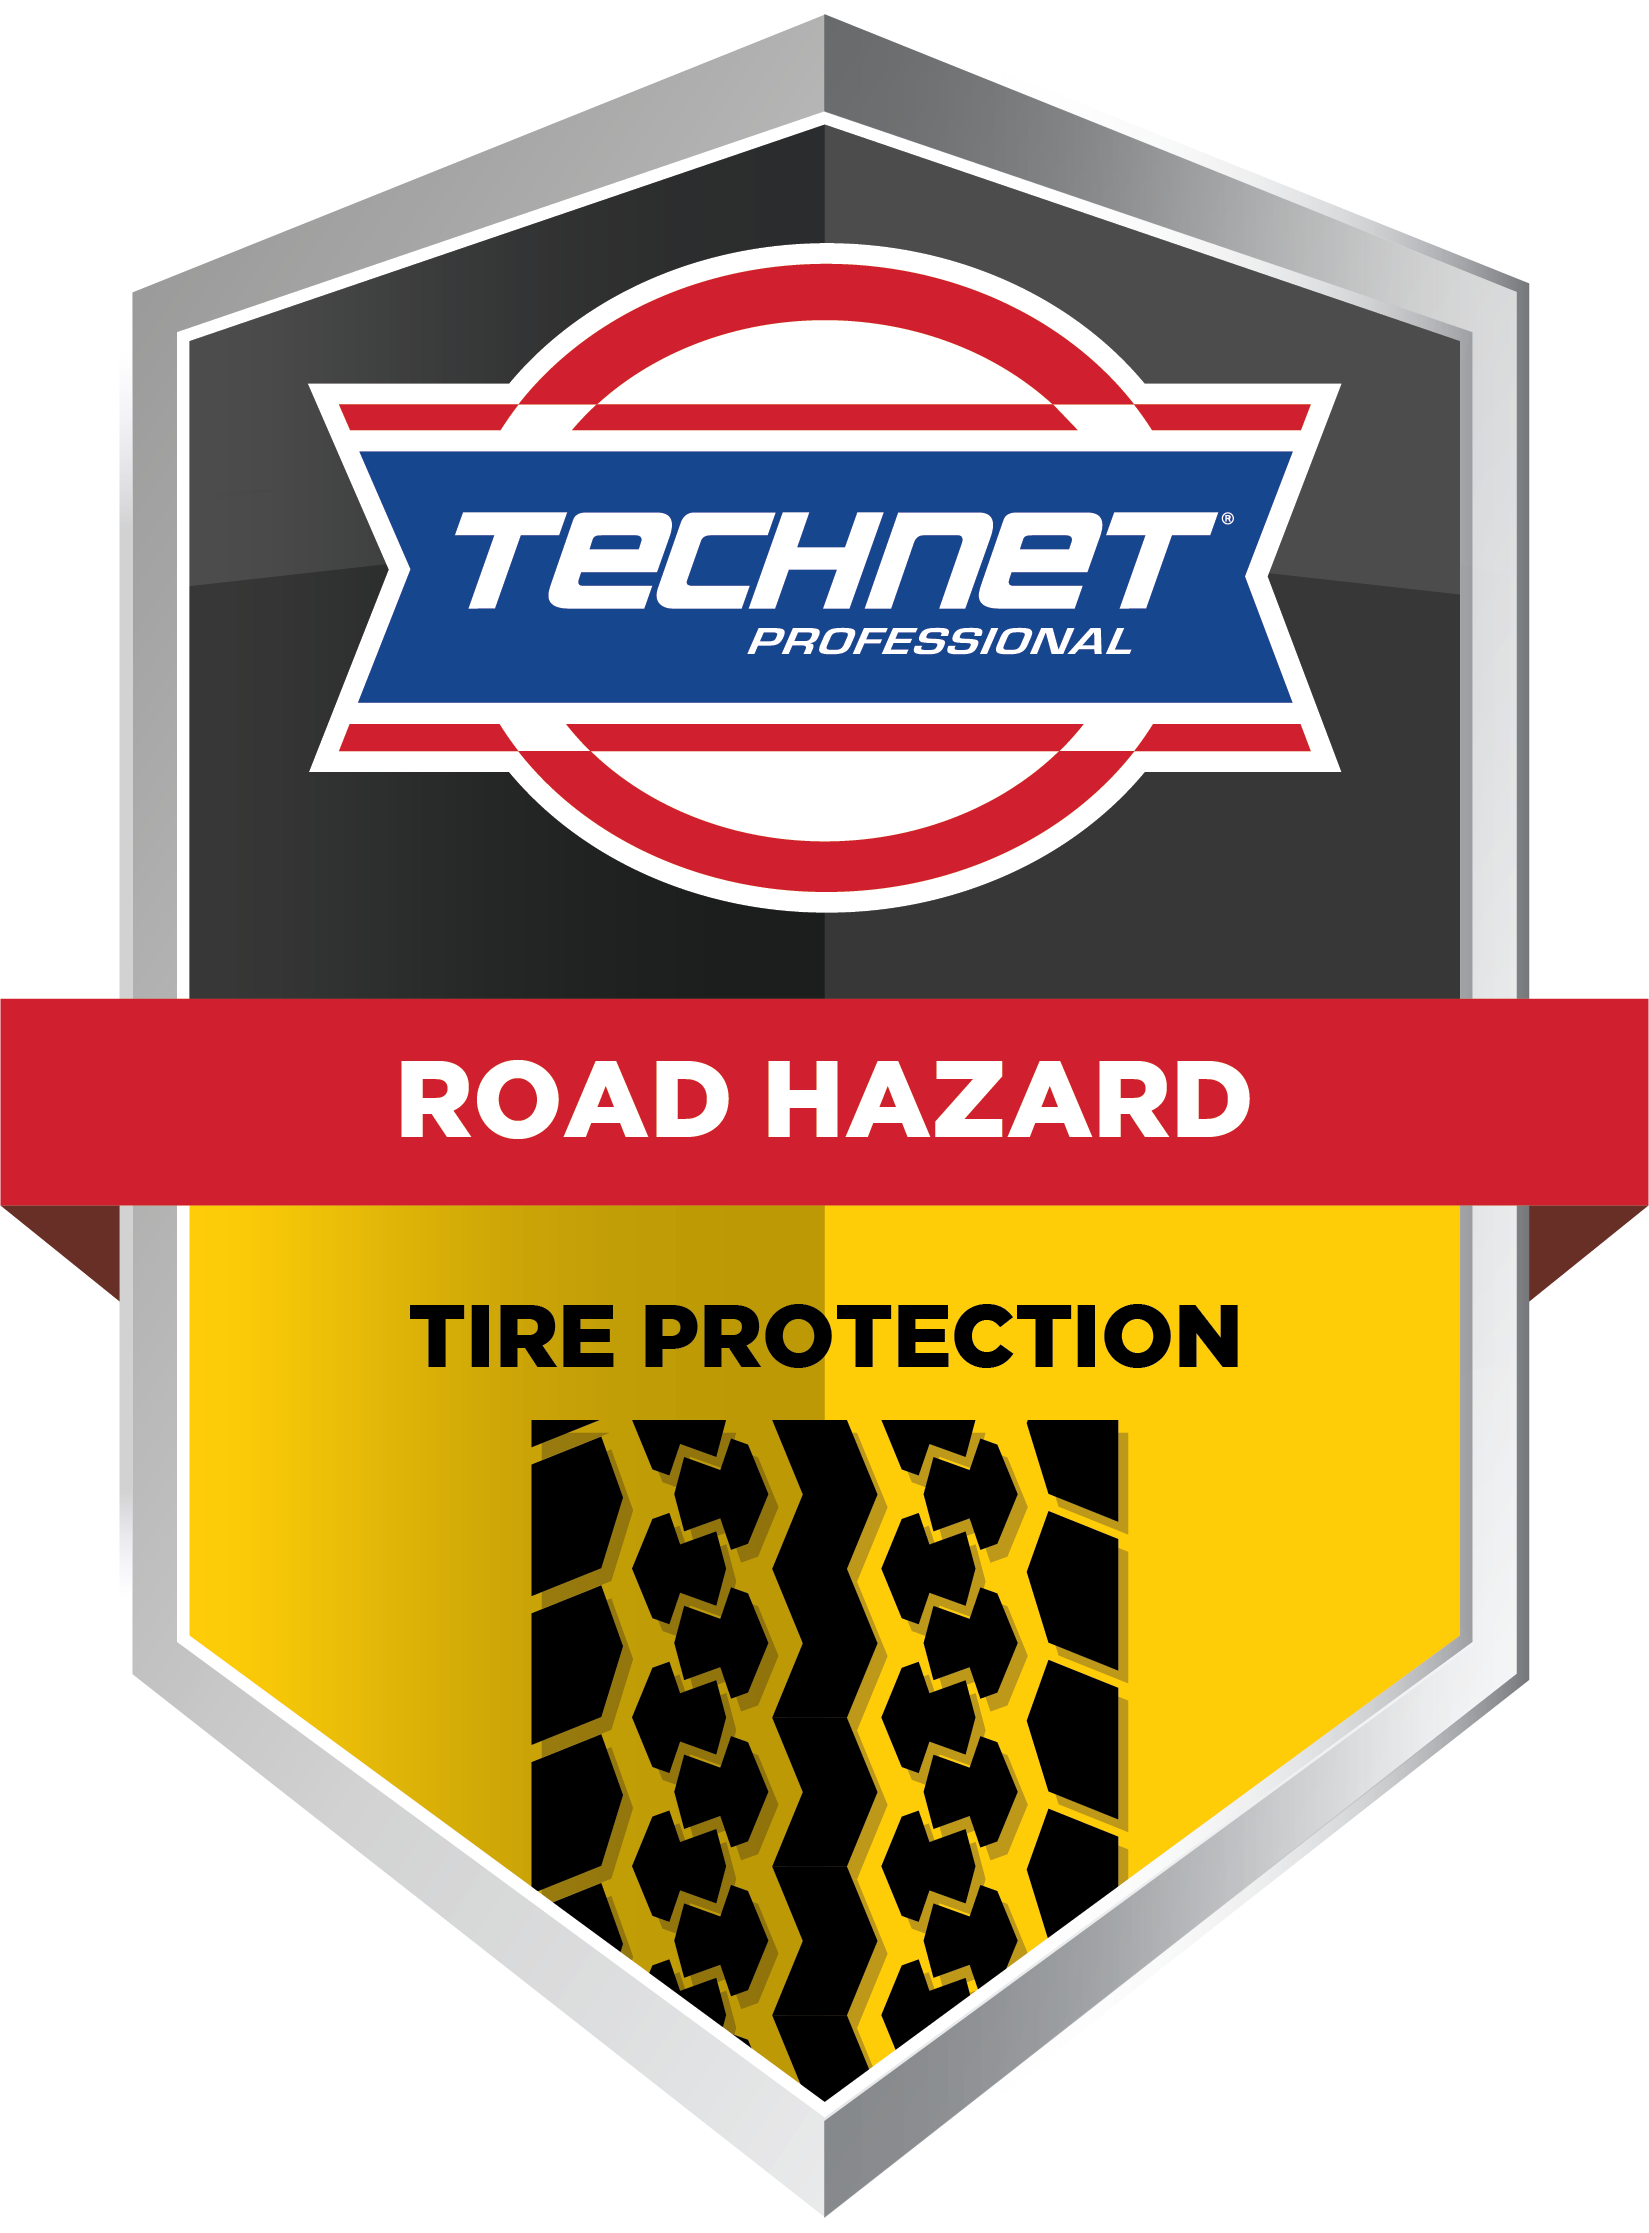 TechNet Road Hazard Tire Protection